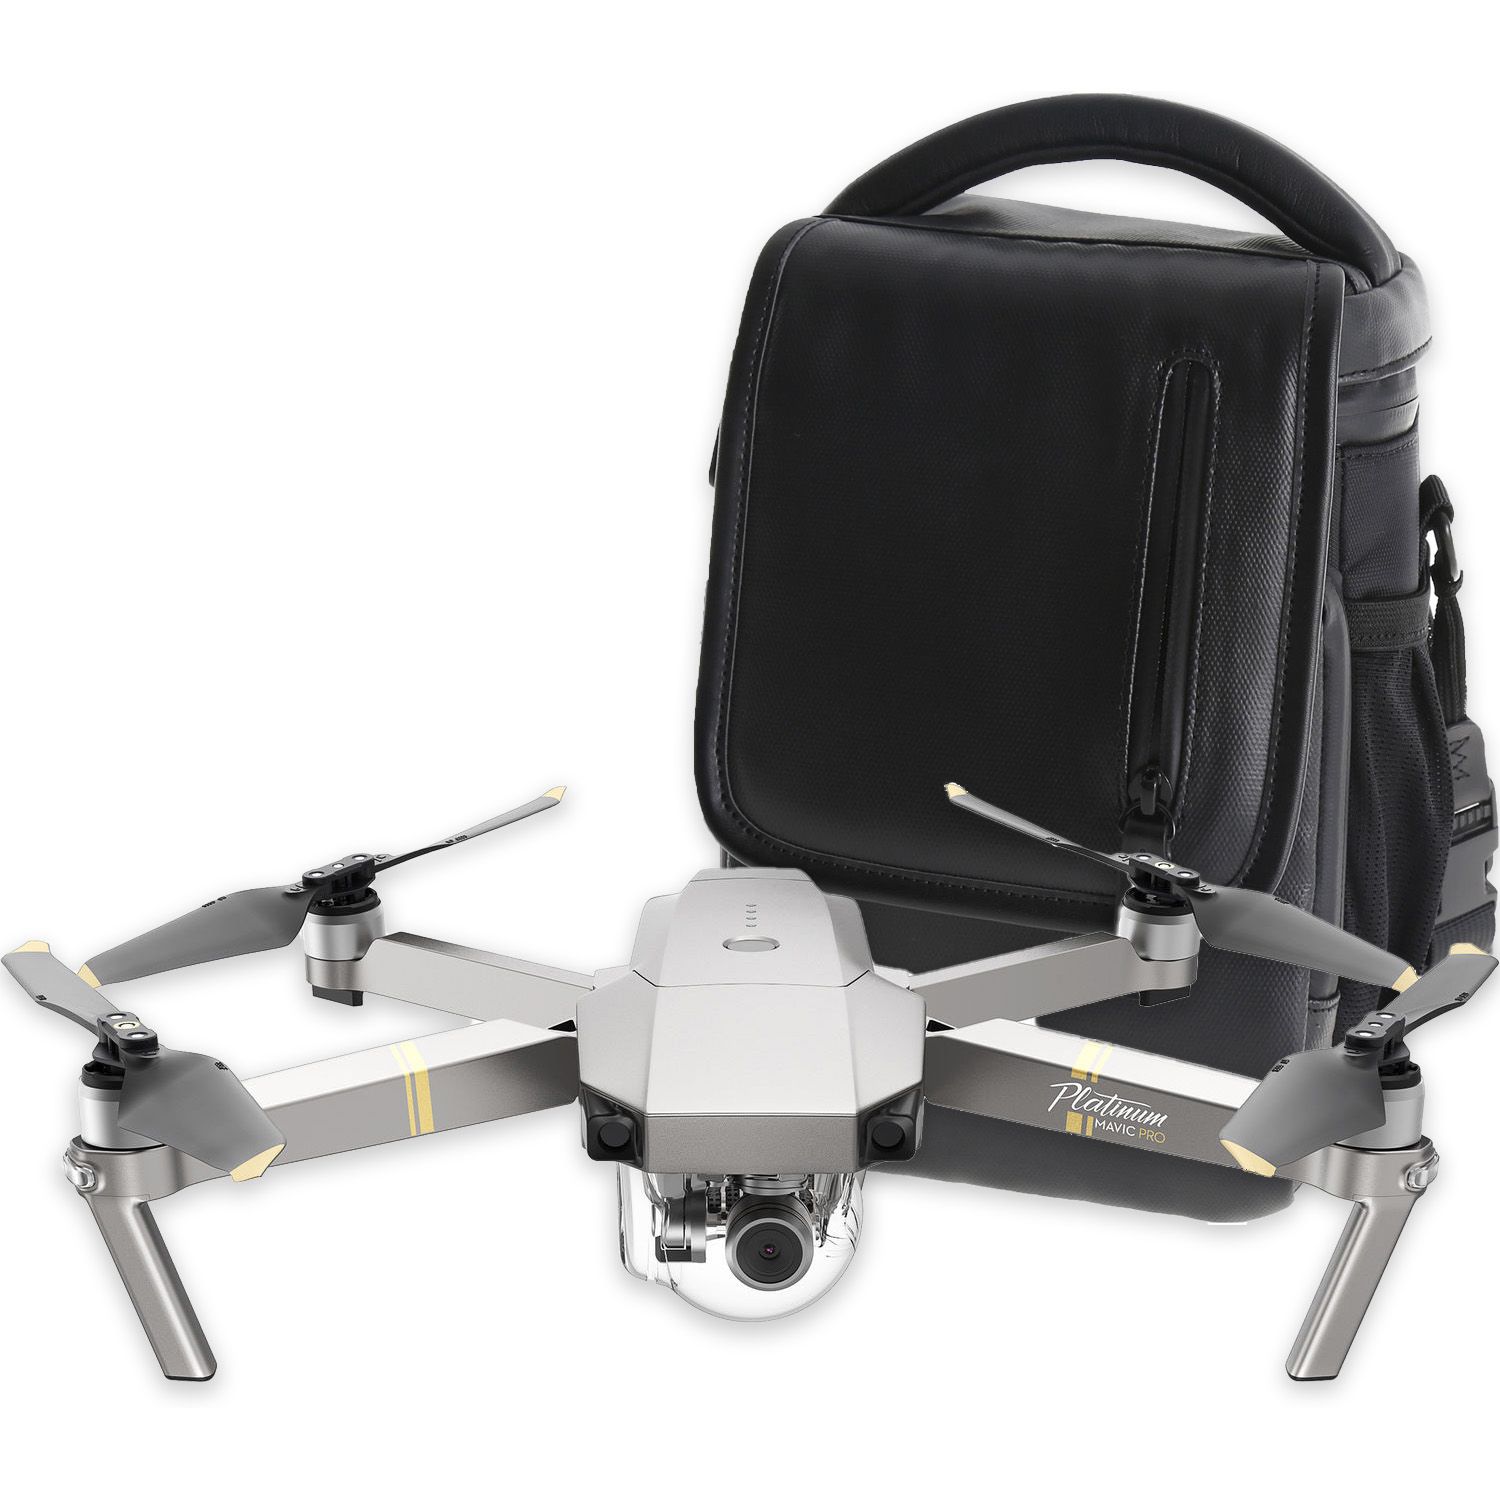 DJI Mavic Pro Platinum Drone and Shoulder Bag Bundle